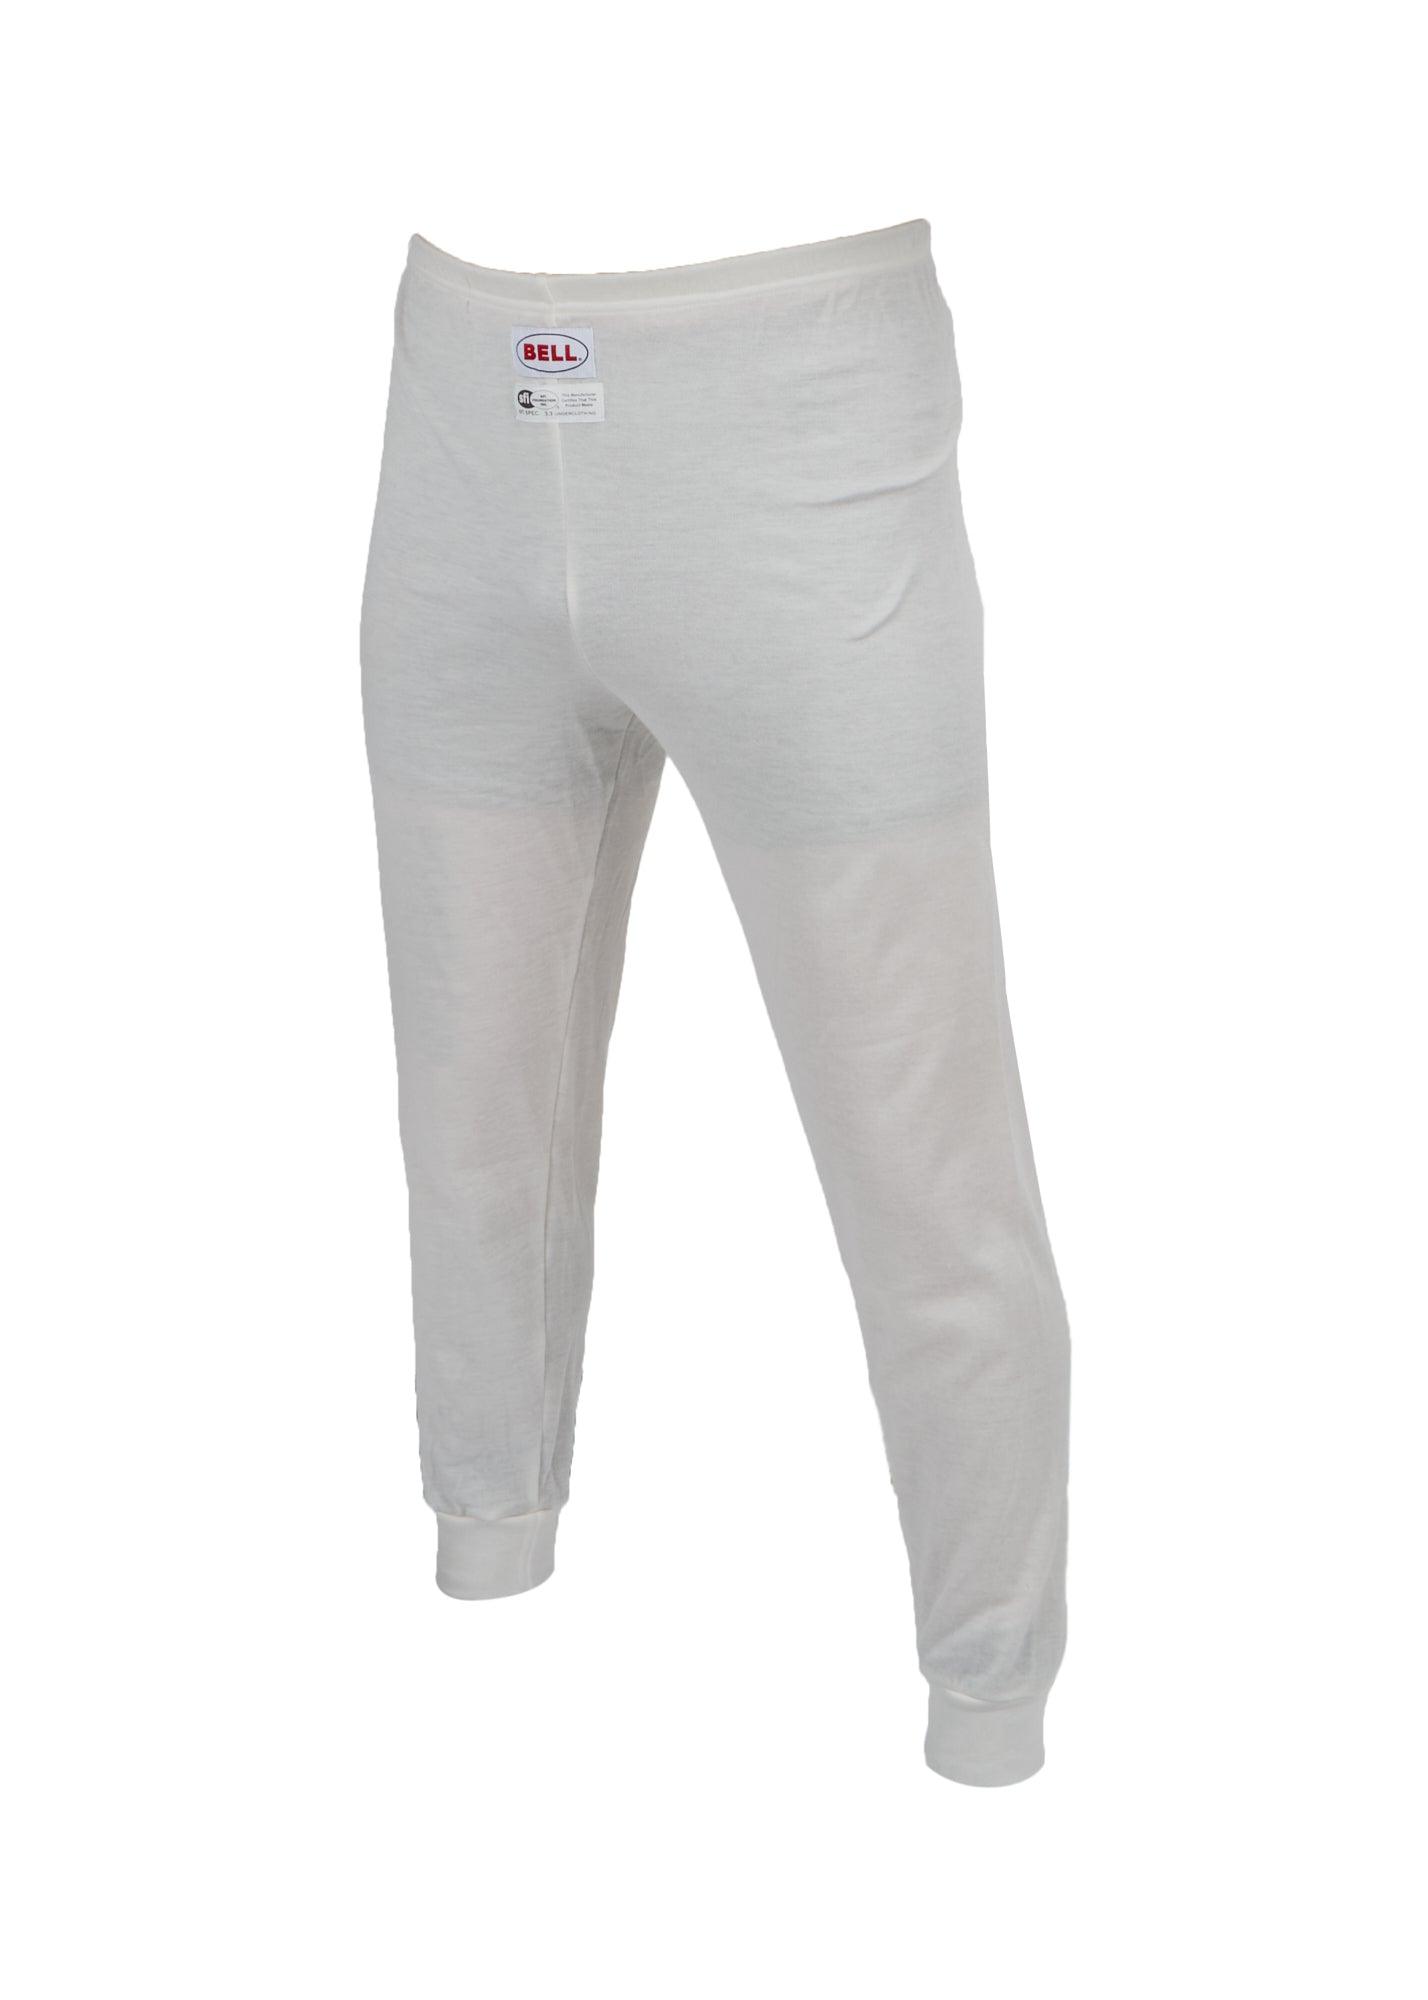 Underwear Bottom SPORT- TX White Med SFI 3.3/5 - Burlile Performance Products